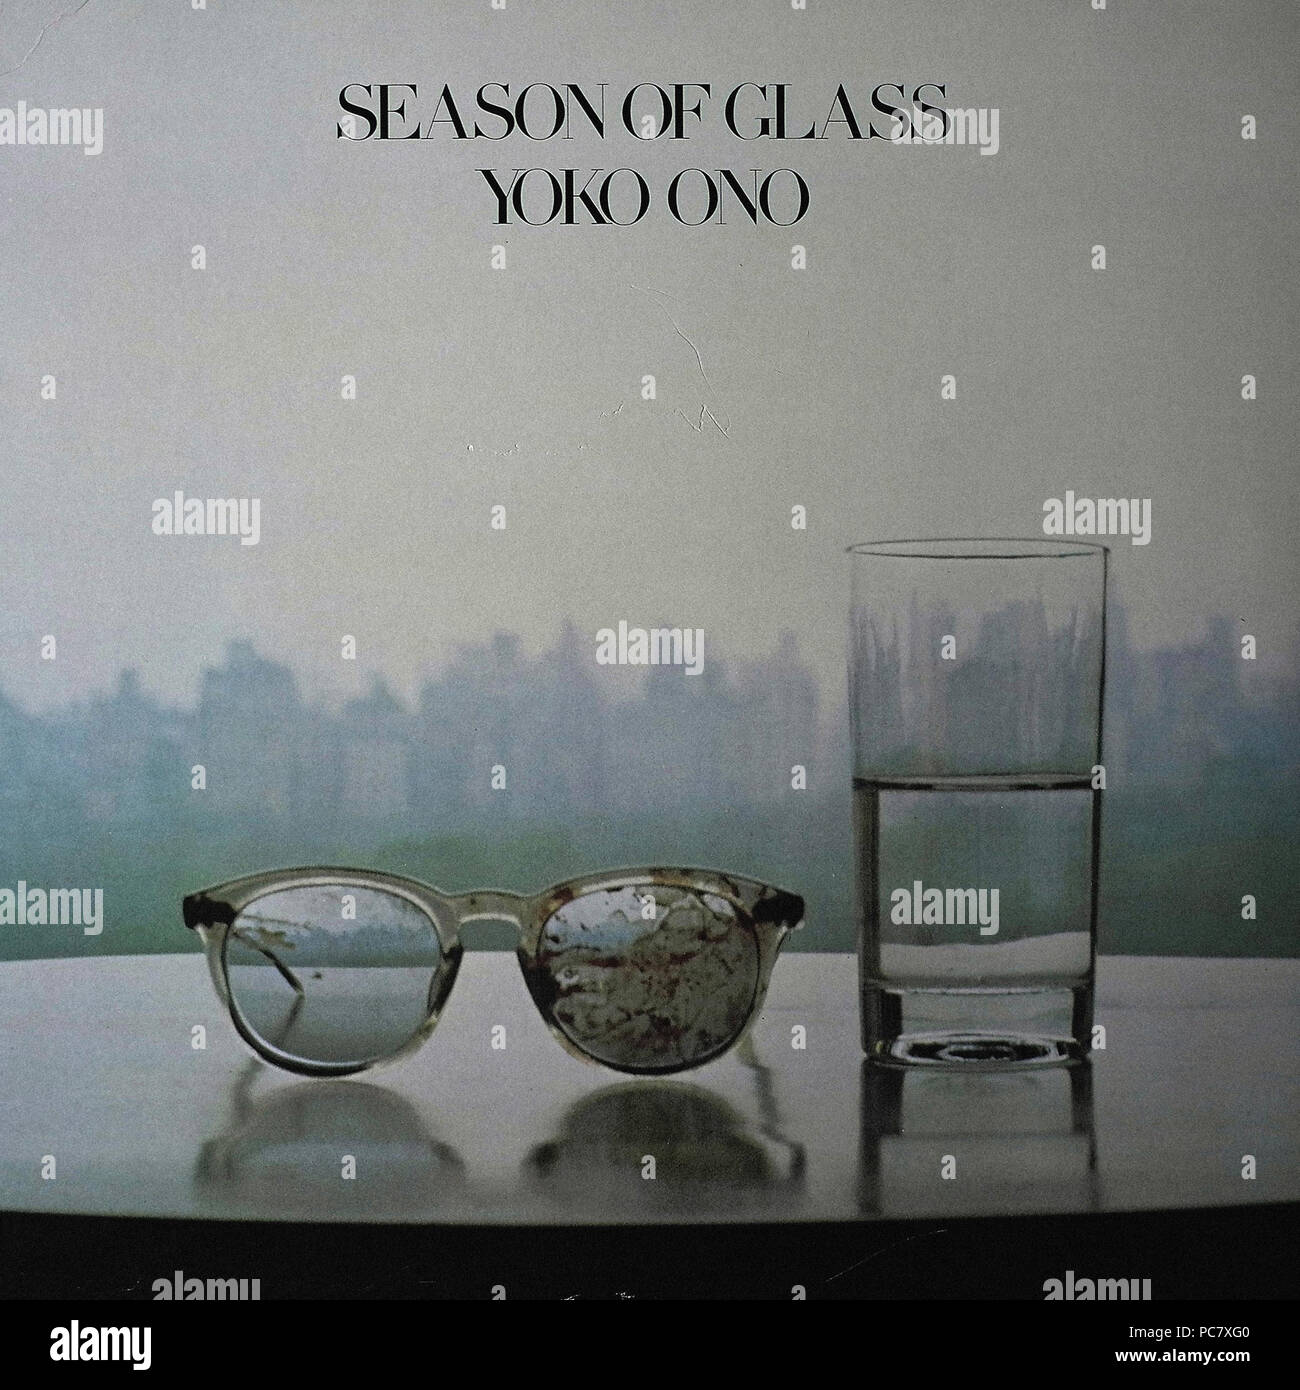 Yoko Ono Saison Von Glas Vintage Vinyl Album Cover Stockfotografie Alamy